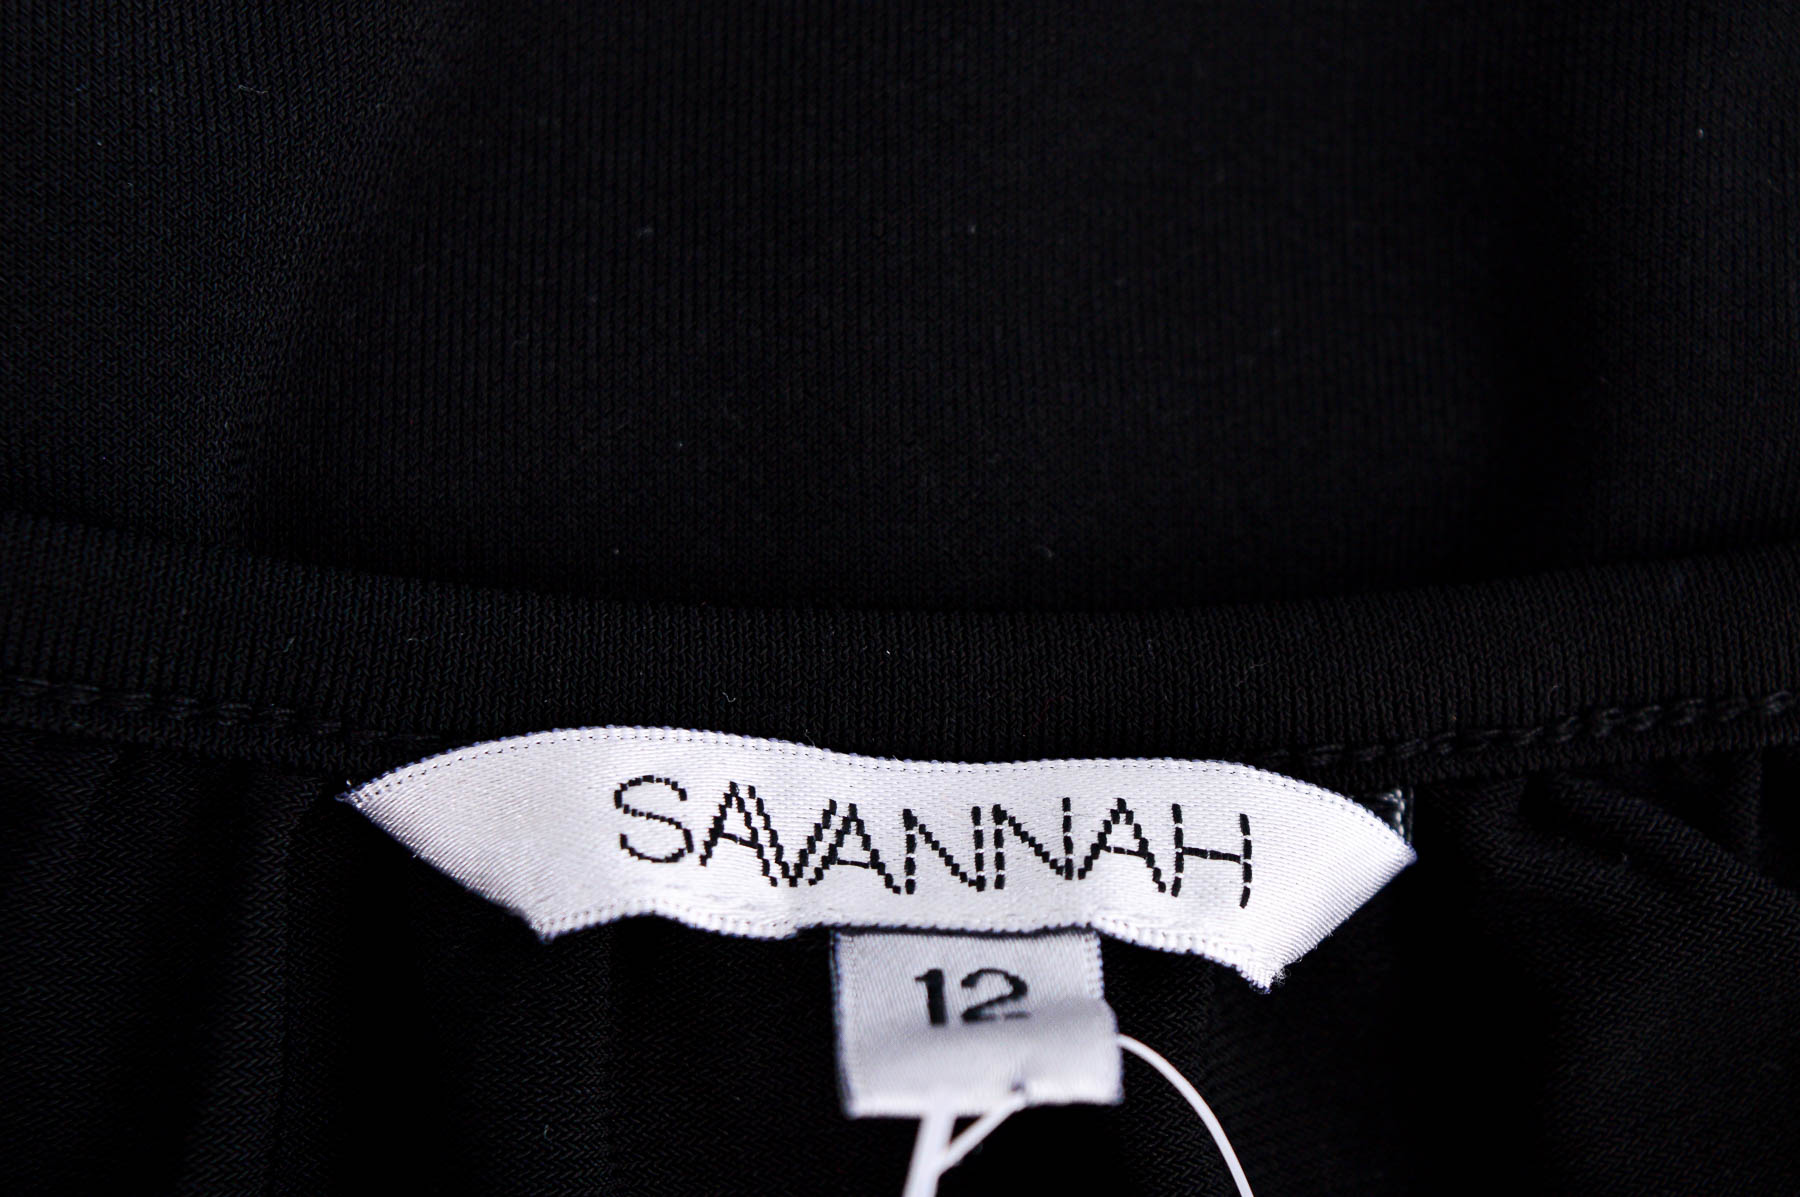 Women's blouse - Savannah - 2